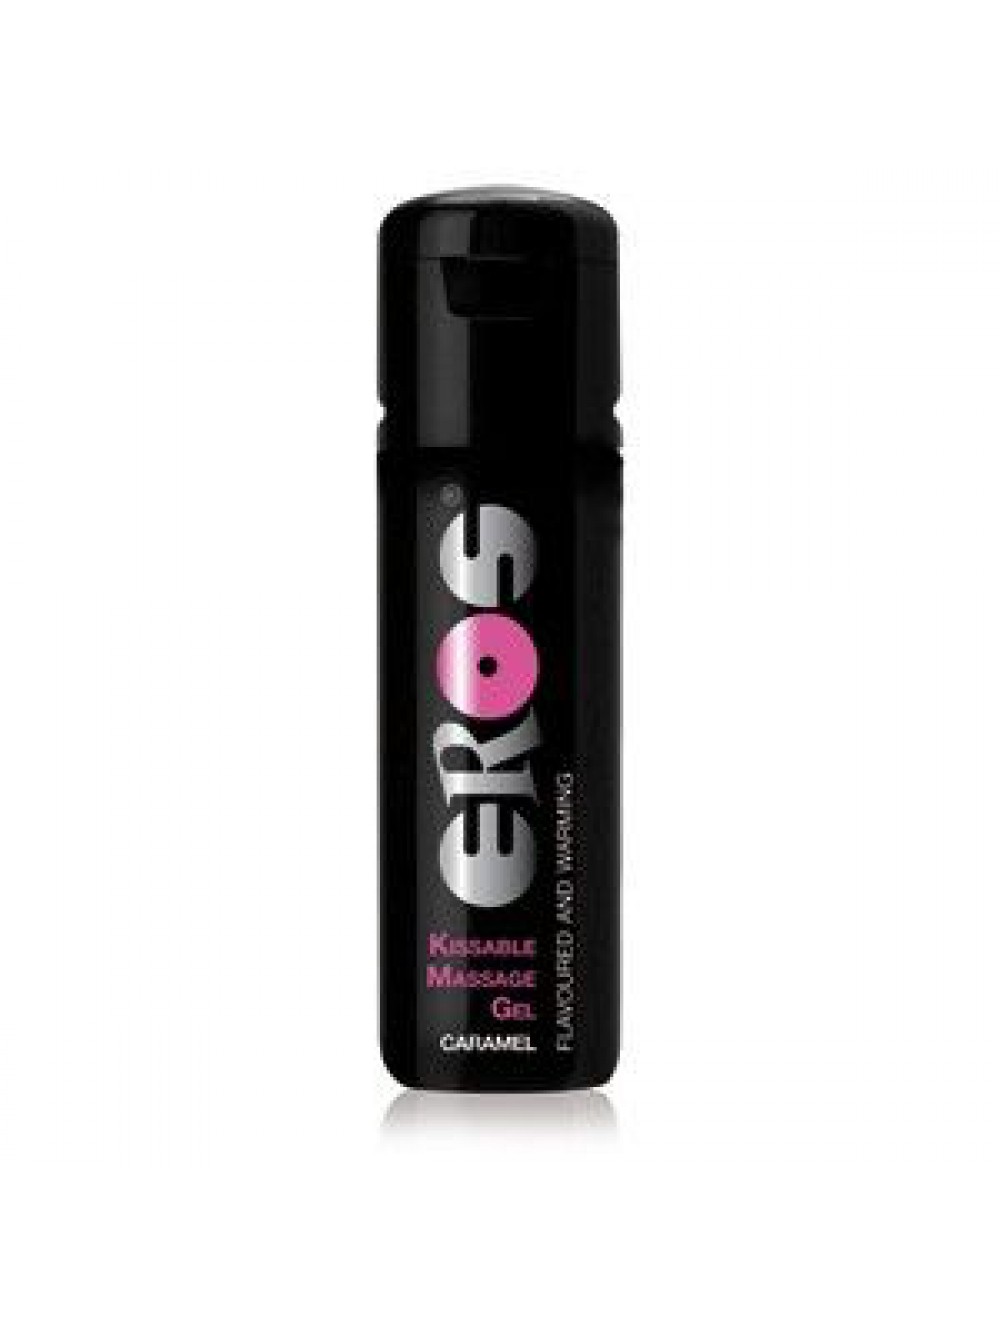 EROS Pleasure Kissable Massage Gel Warming - CARAMEL, 100 ml by Eros